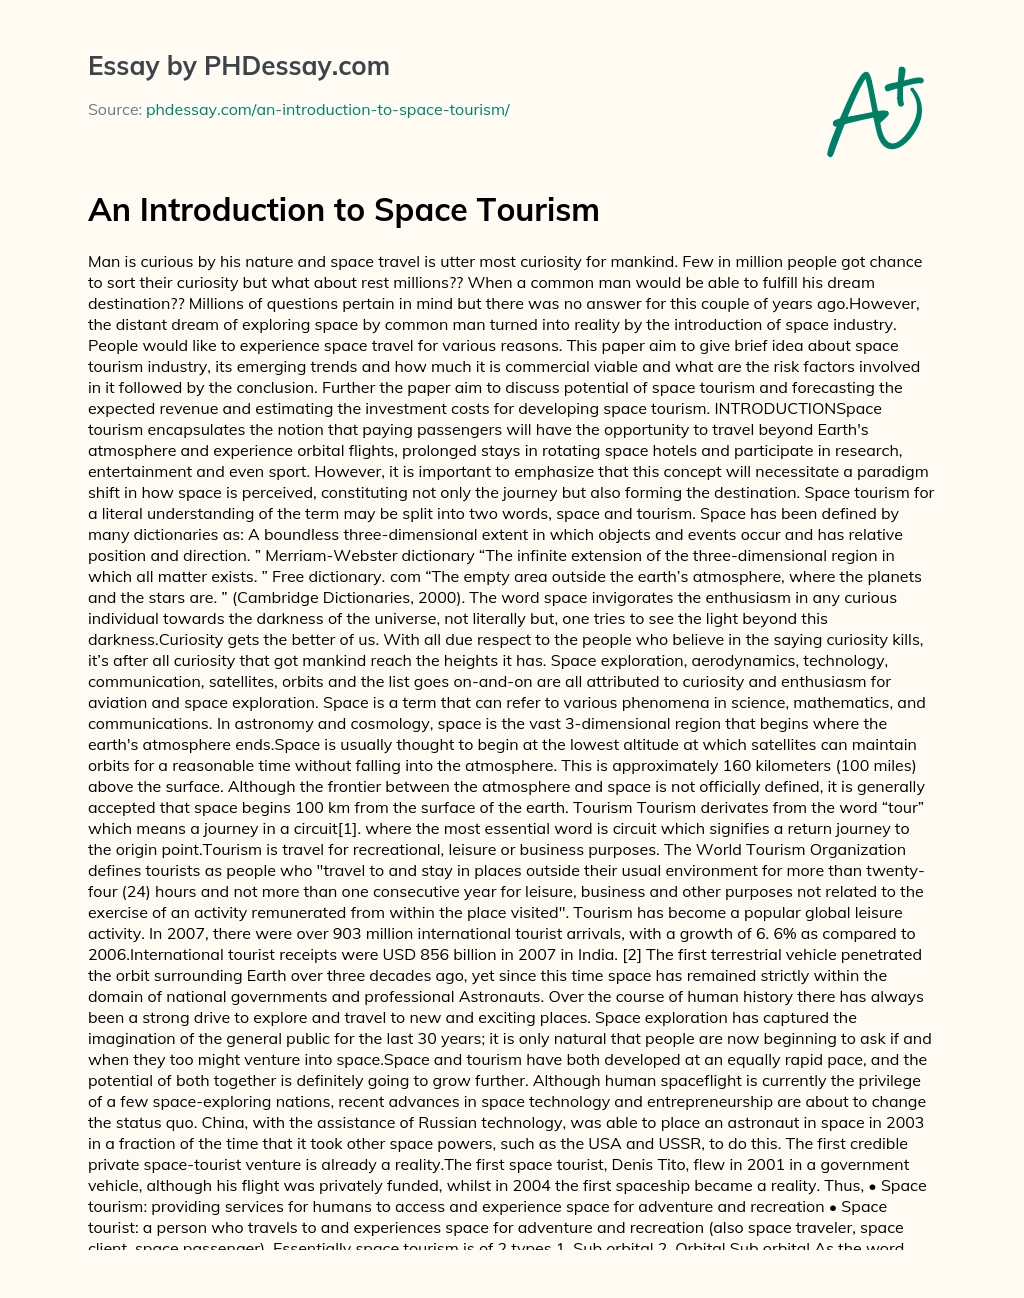 space tourism essay upsc